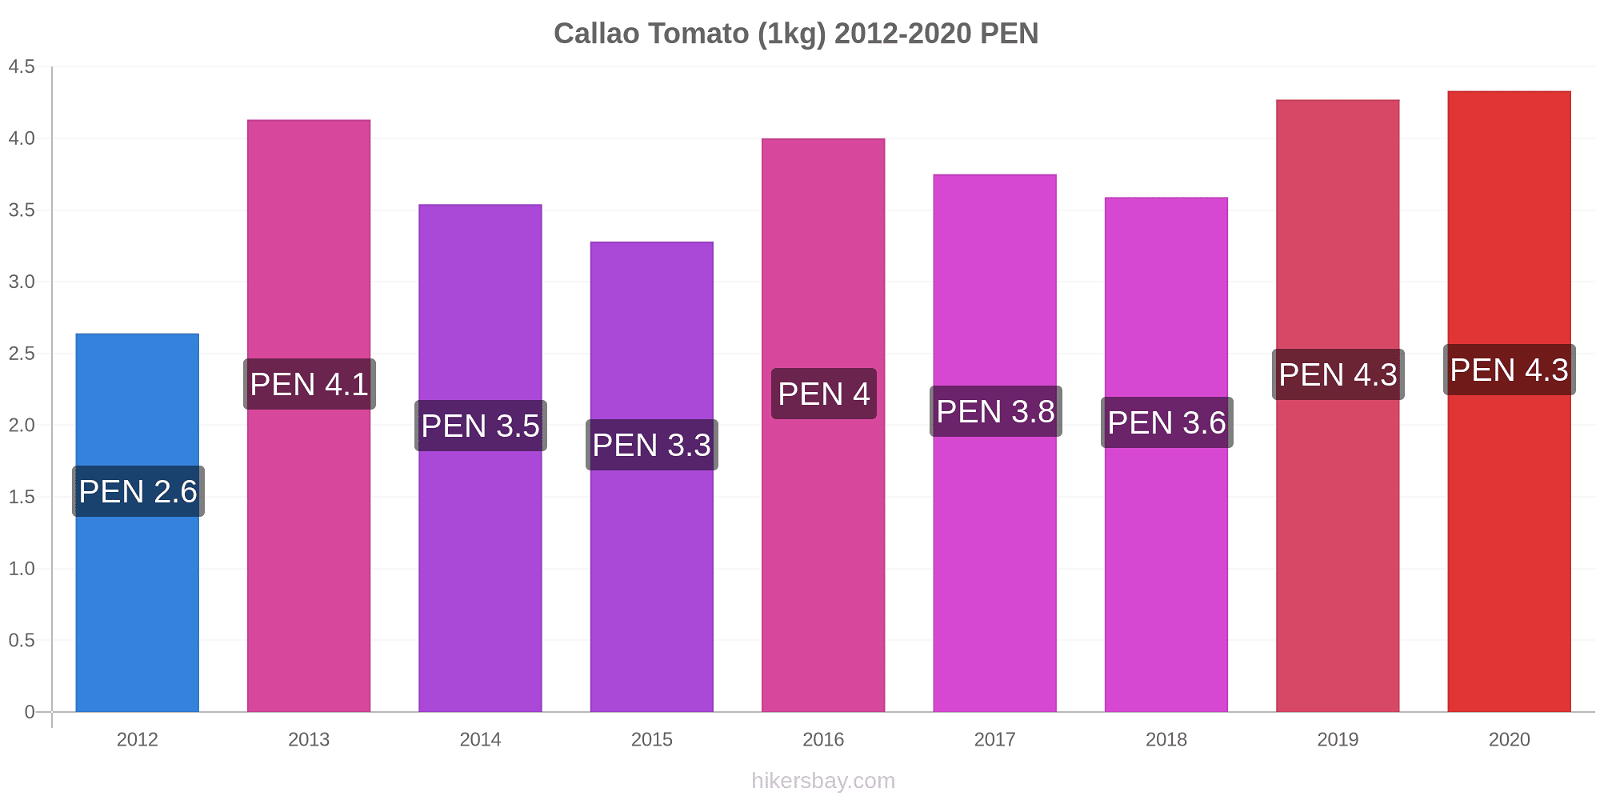 Callao price changes Tomato (1kg) hikersbay.com